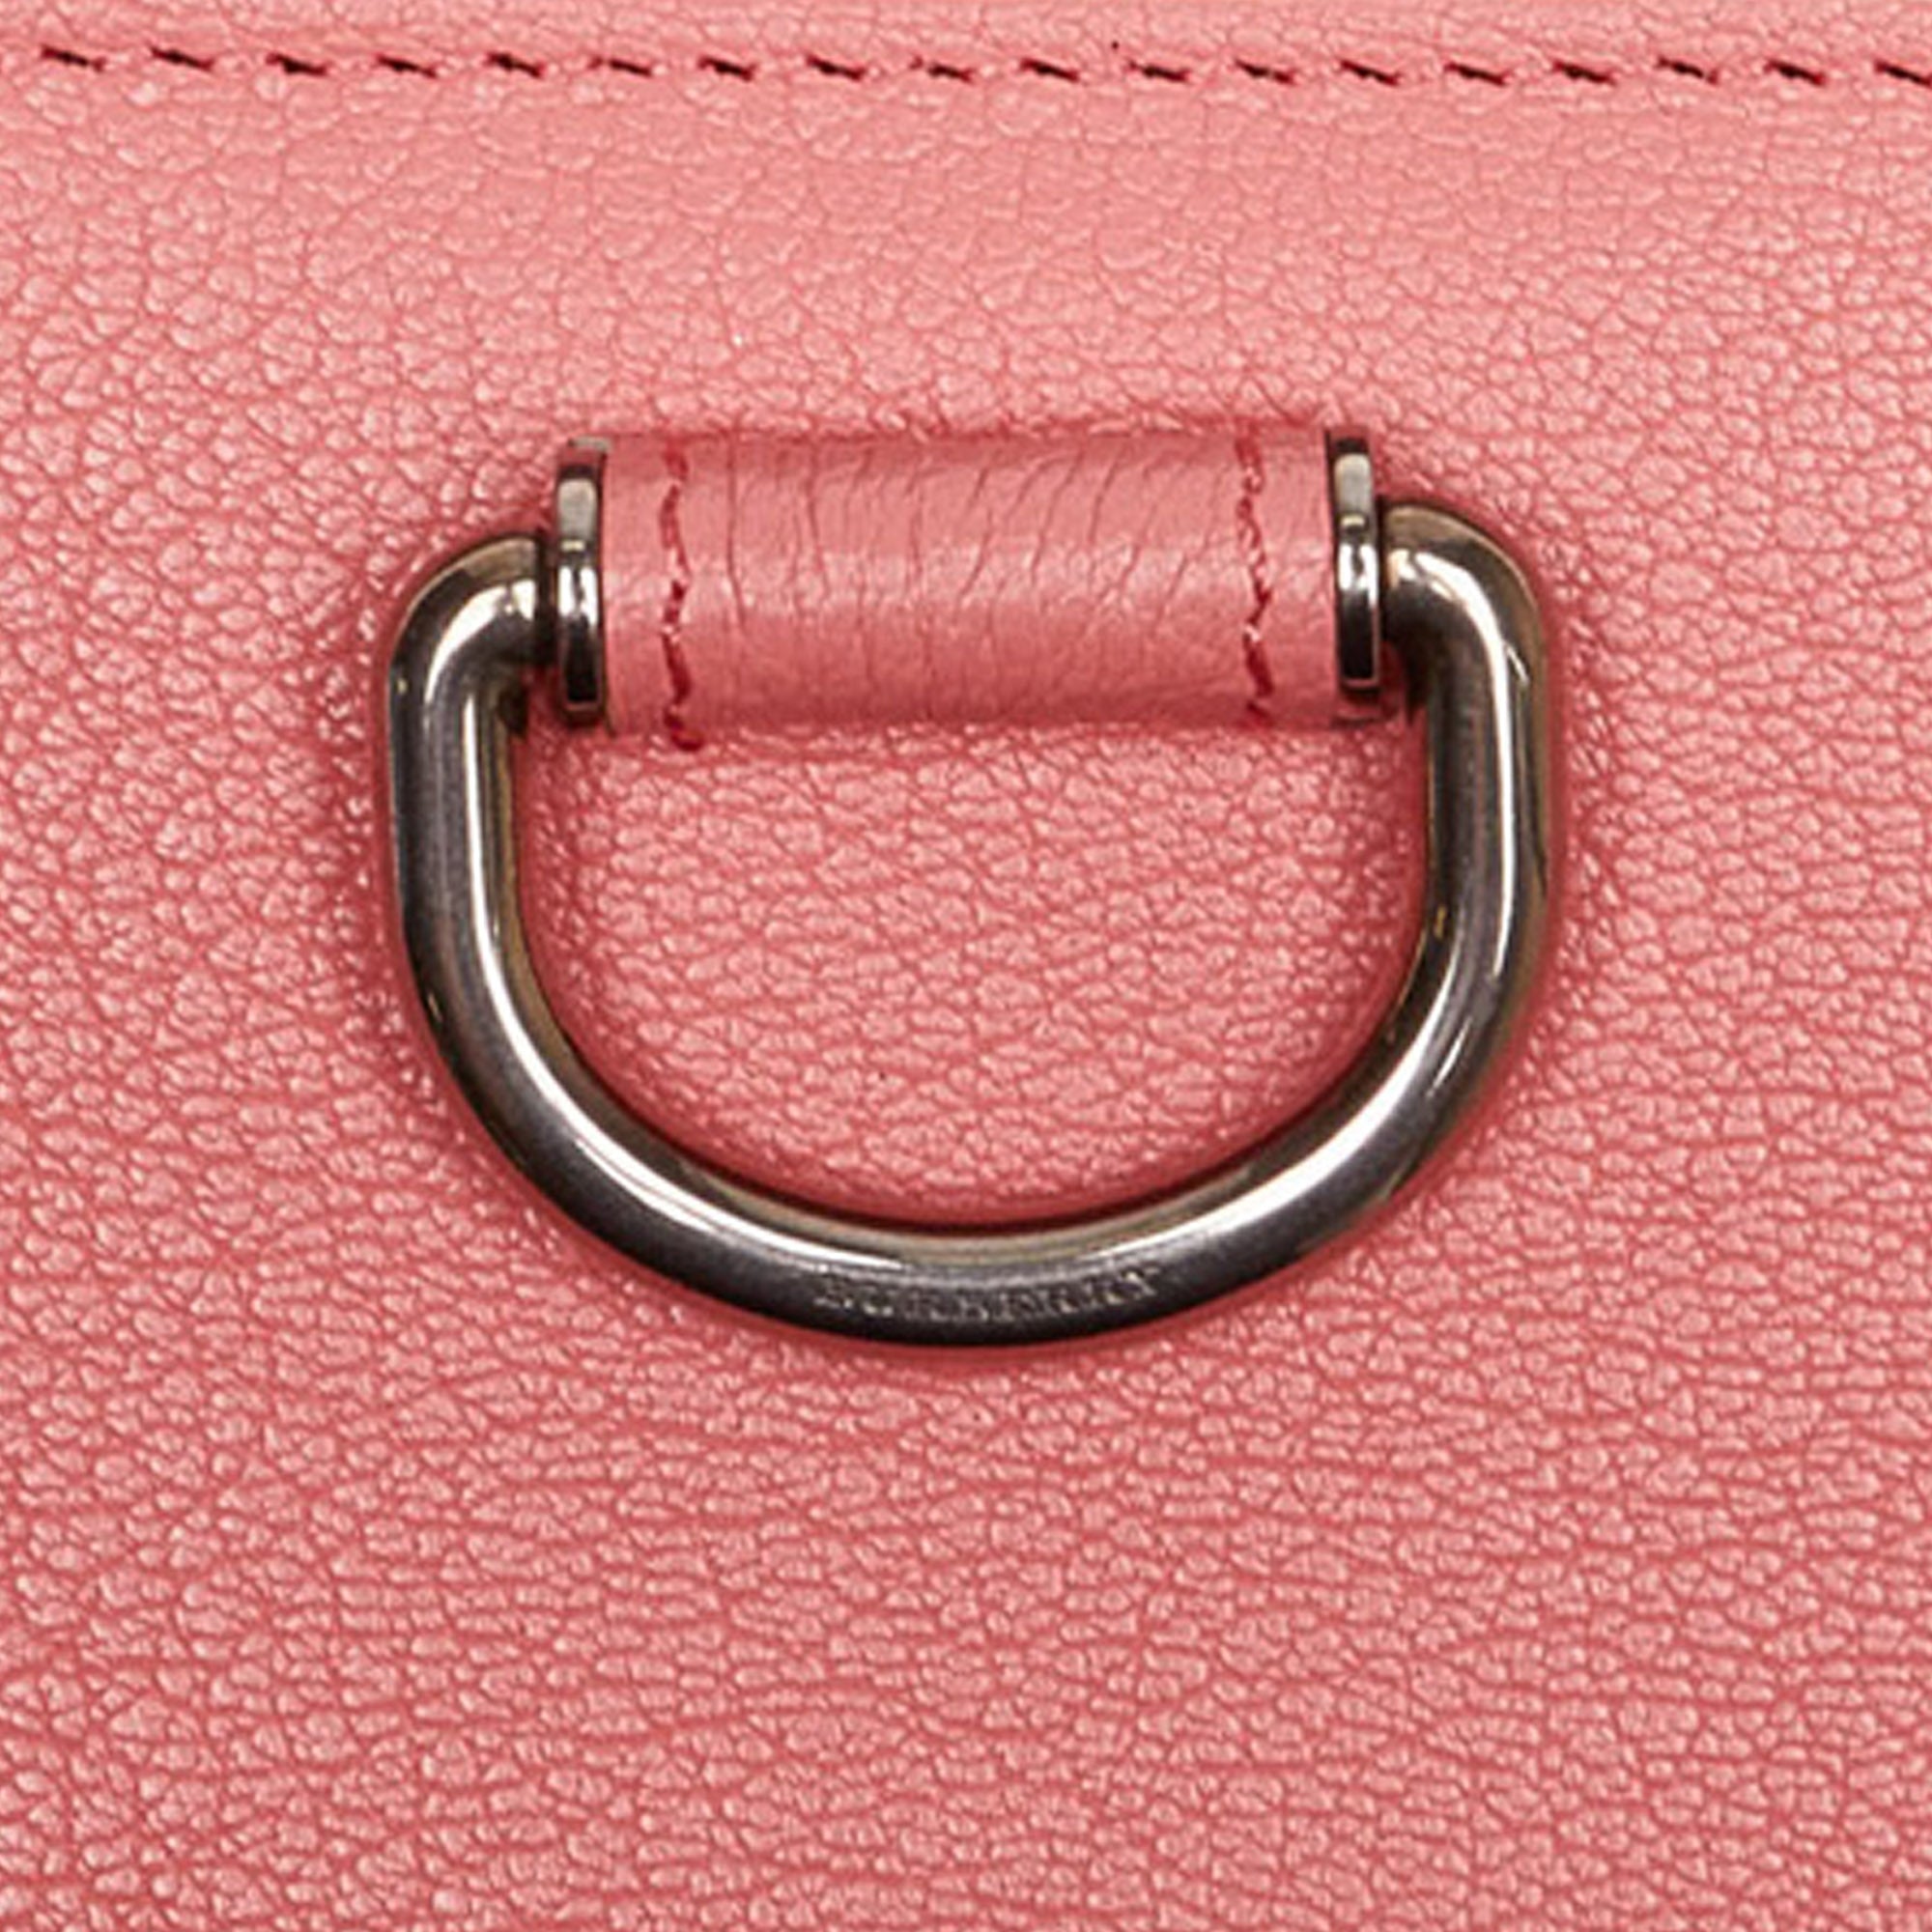 Pink Burberry Highbury Leather Continental Wallet – Designer Revival